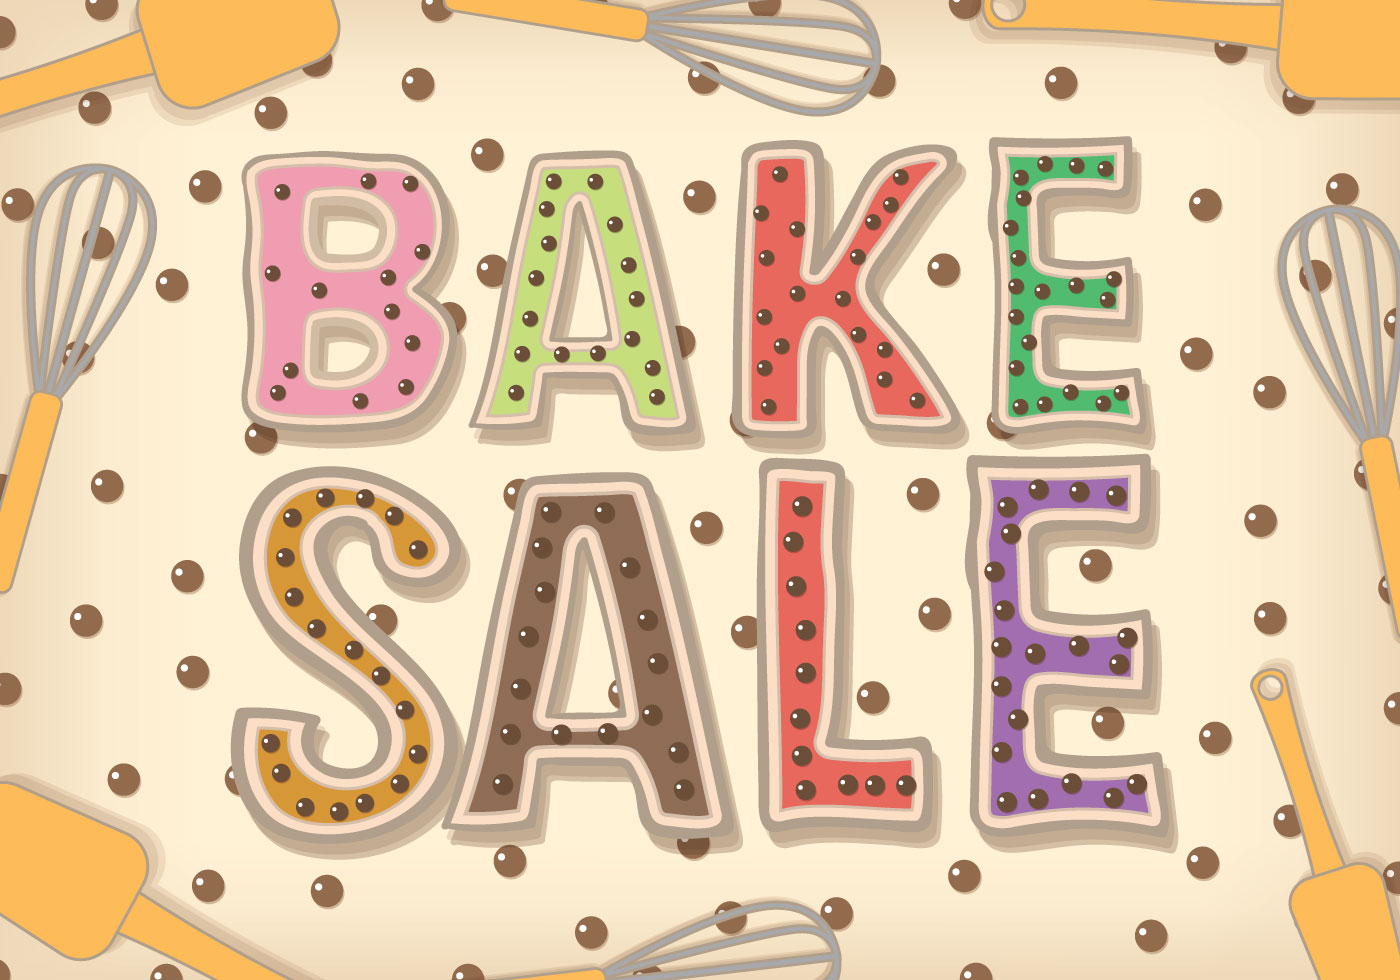 bake-sale-vector-download-free-vector-art-stock-graphics-images